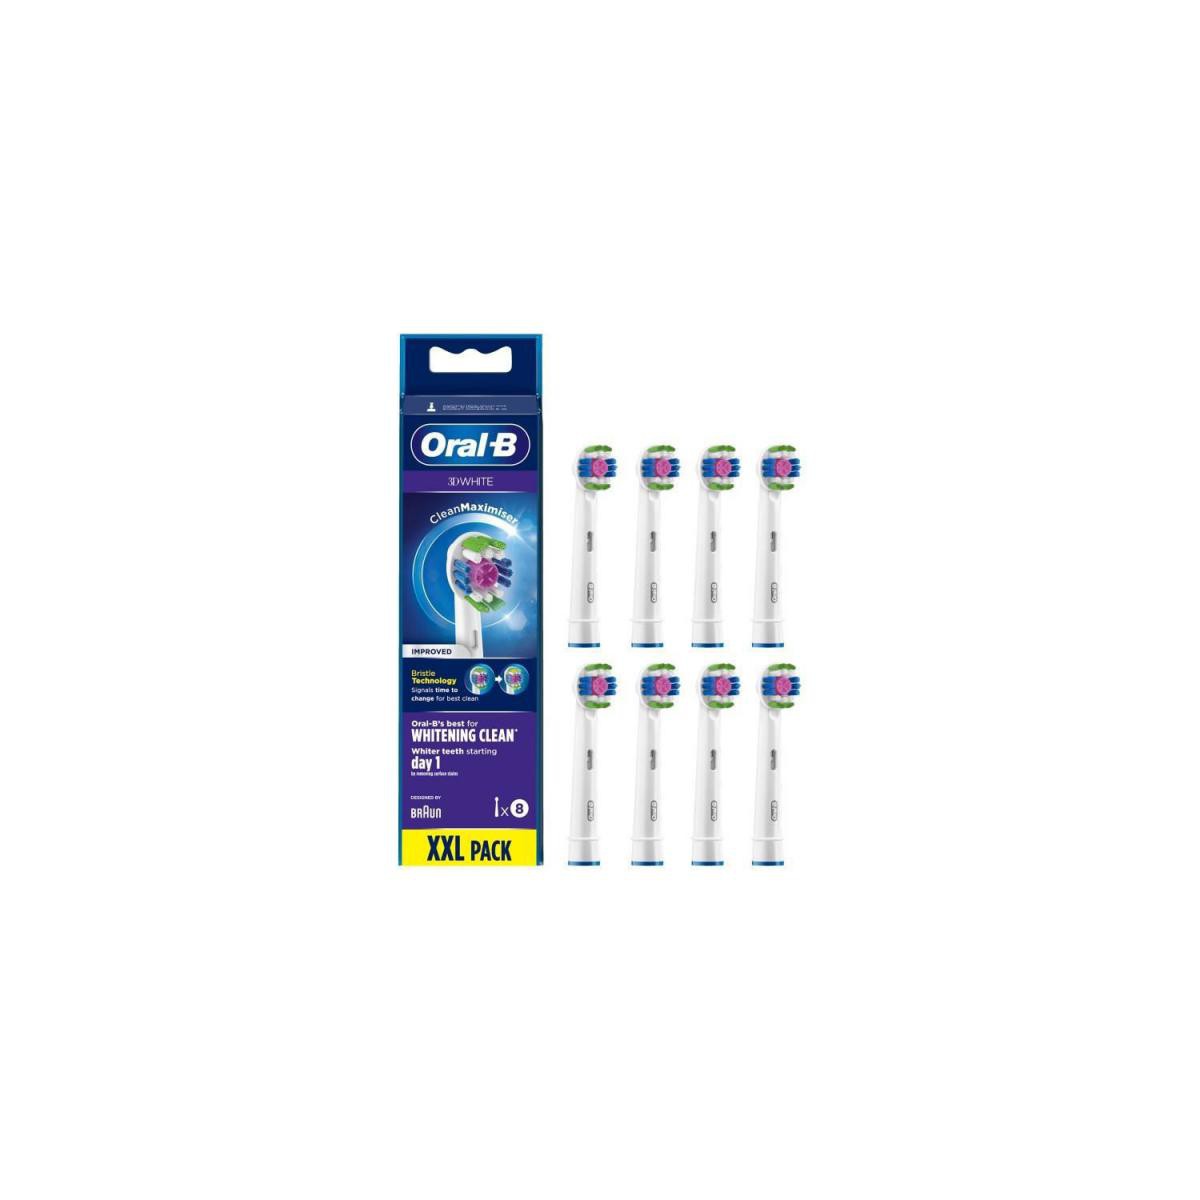 Oral-B - Oral-B 3D White Brossette Avec CleanMaximiser, 8 - Kits interdentaires